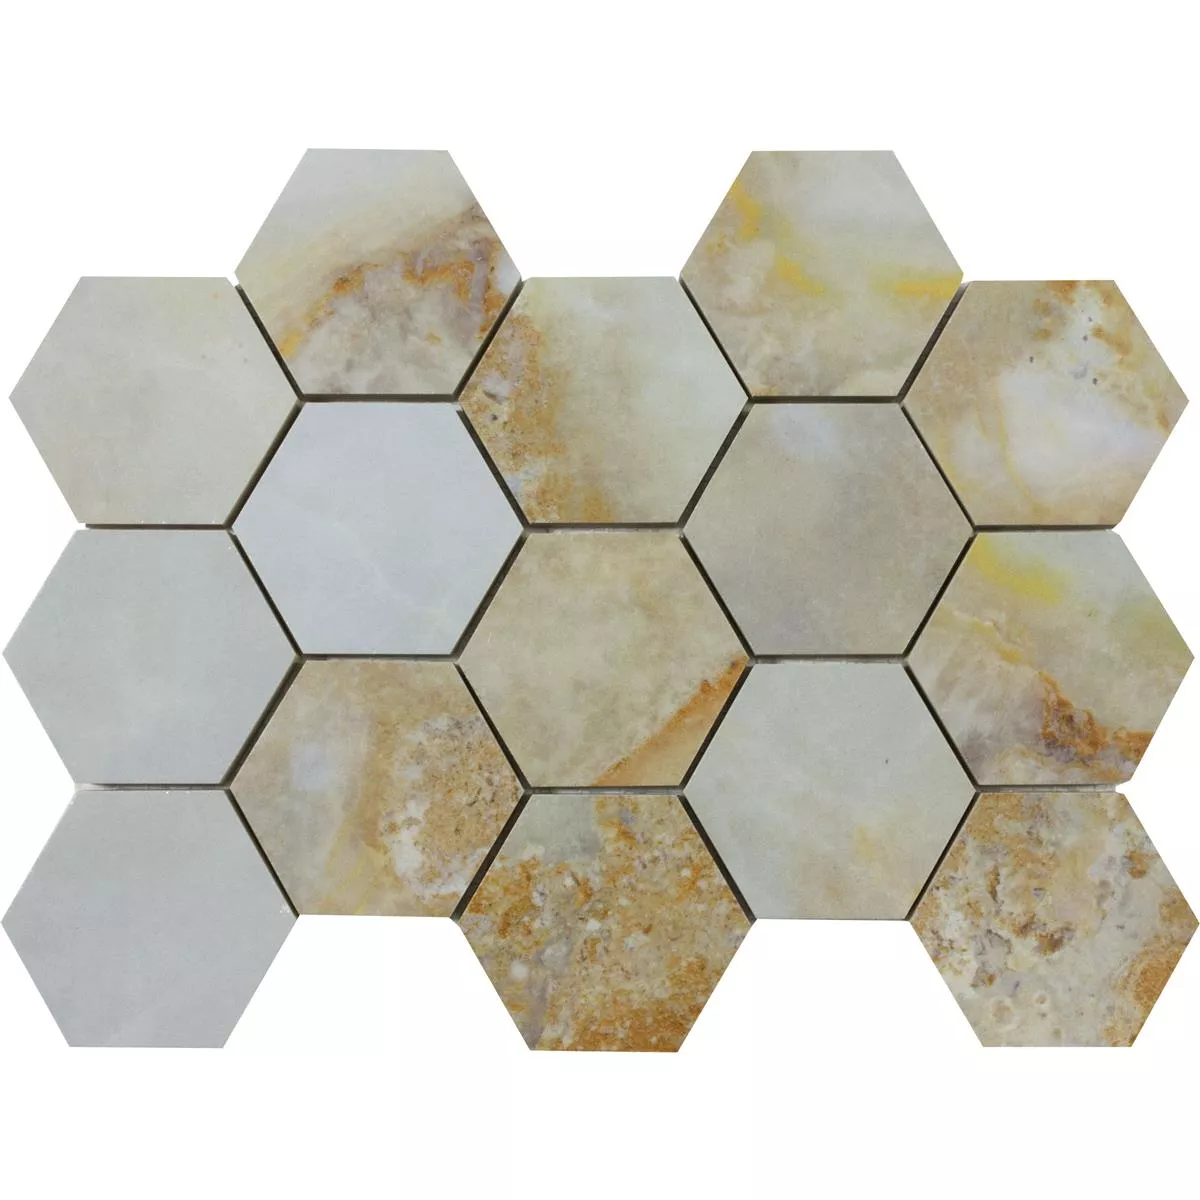 Keramikmosaik Fliesen Naftalin Hexagon Braun Weiß